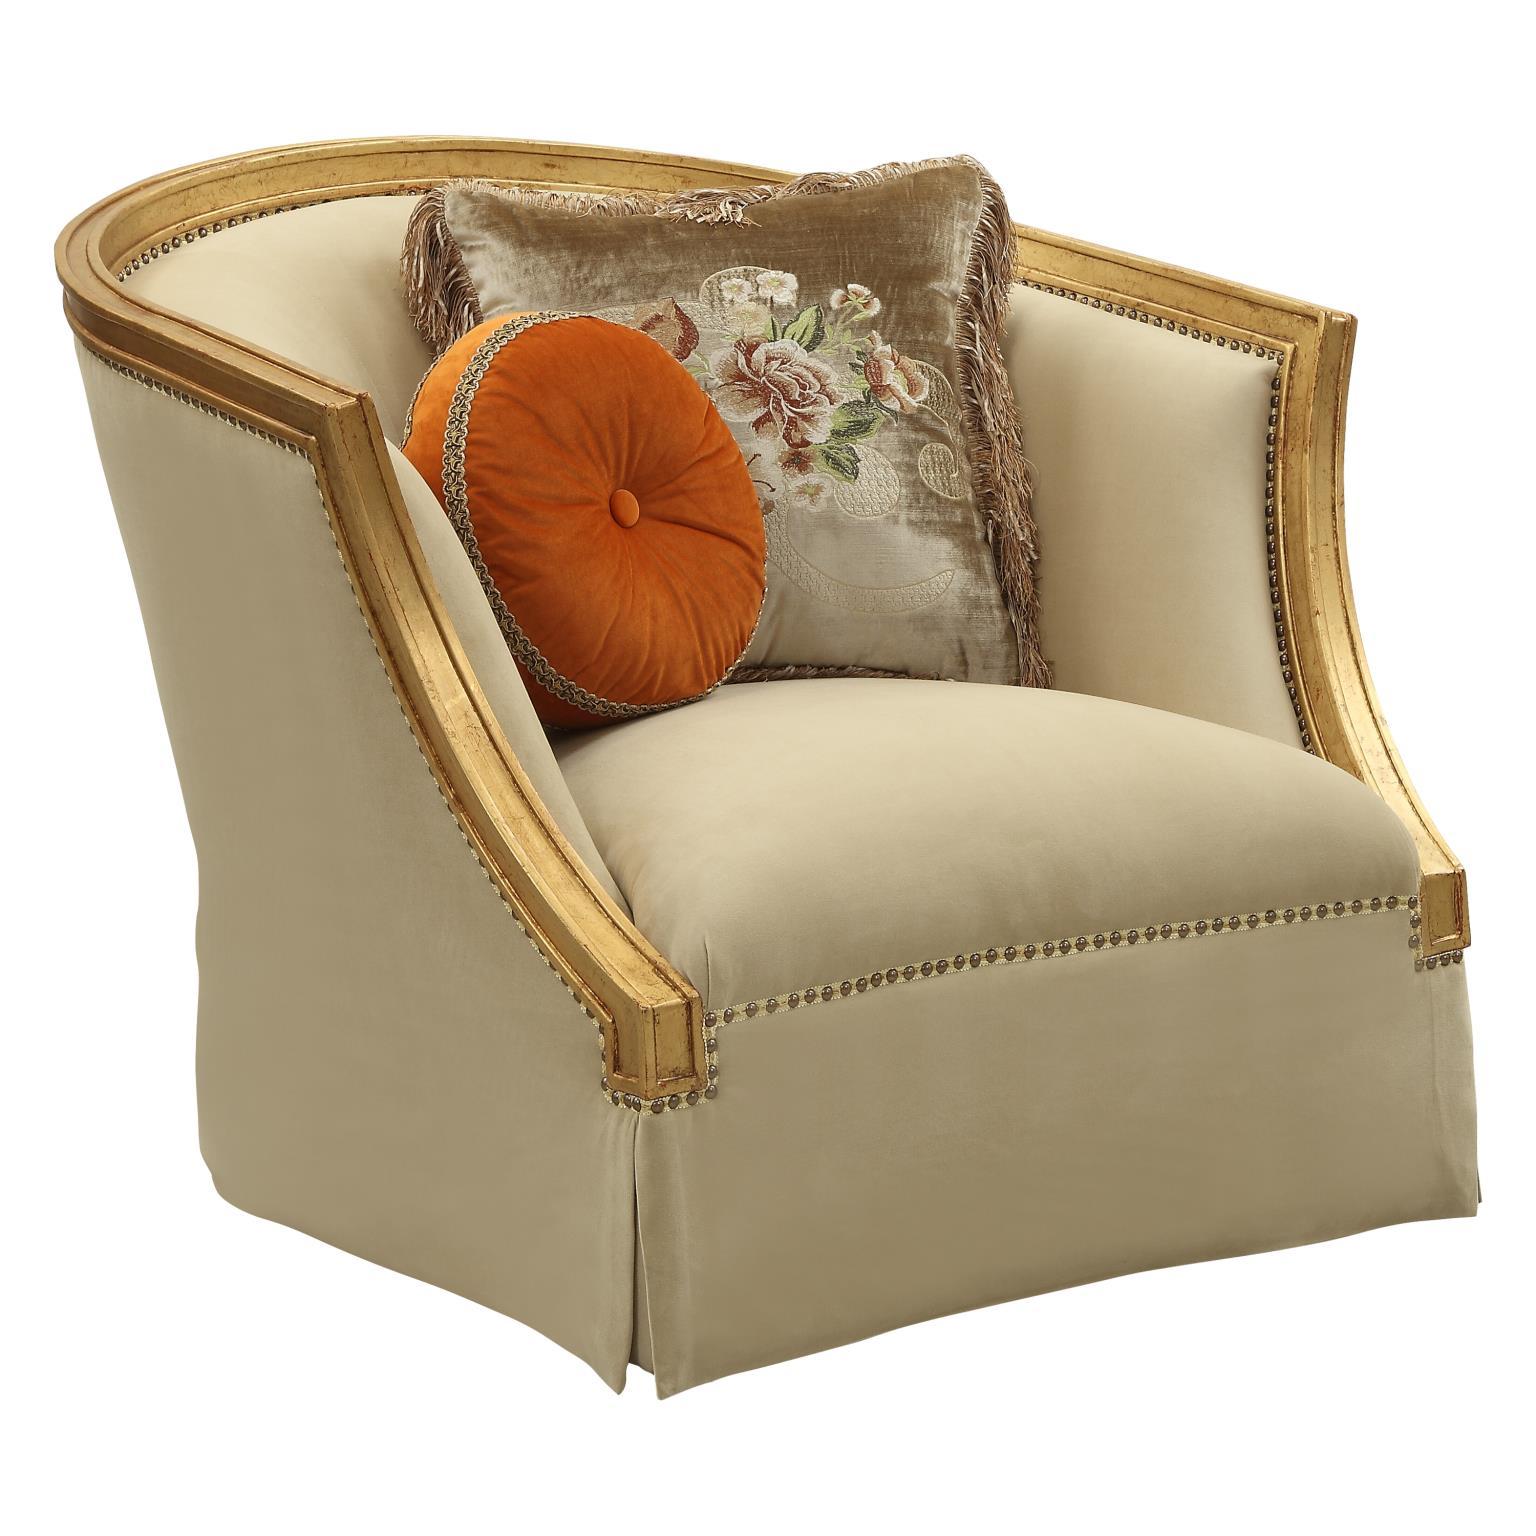 Classic, Traditional Arm Chair Daesha 50837 50837-Daesha in Tan, Gold Fabric